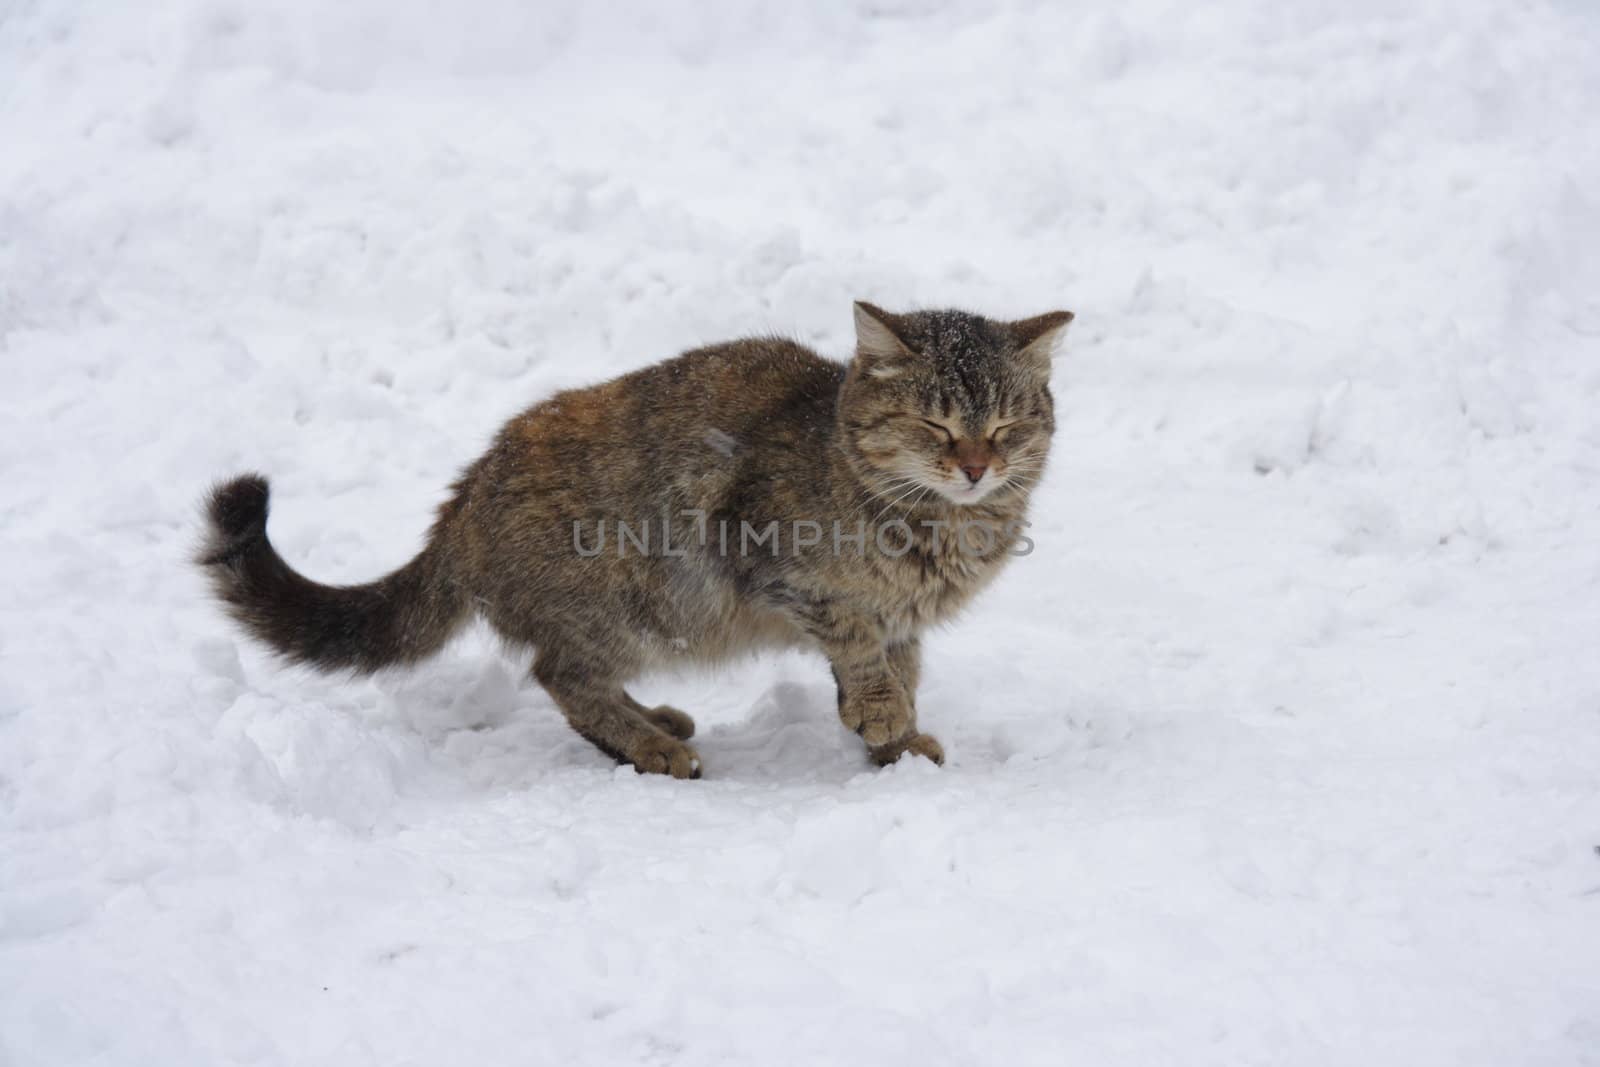 Winking cat on the snow